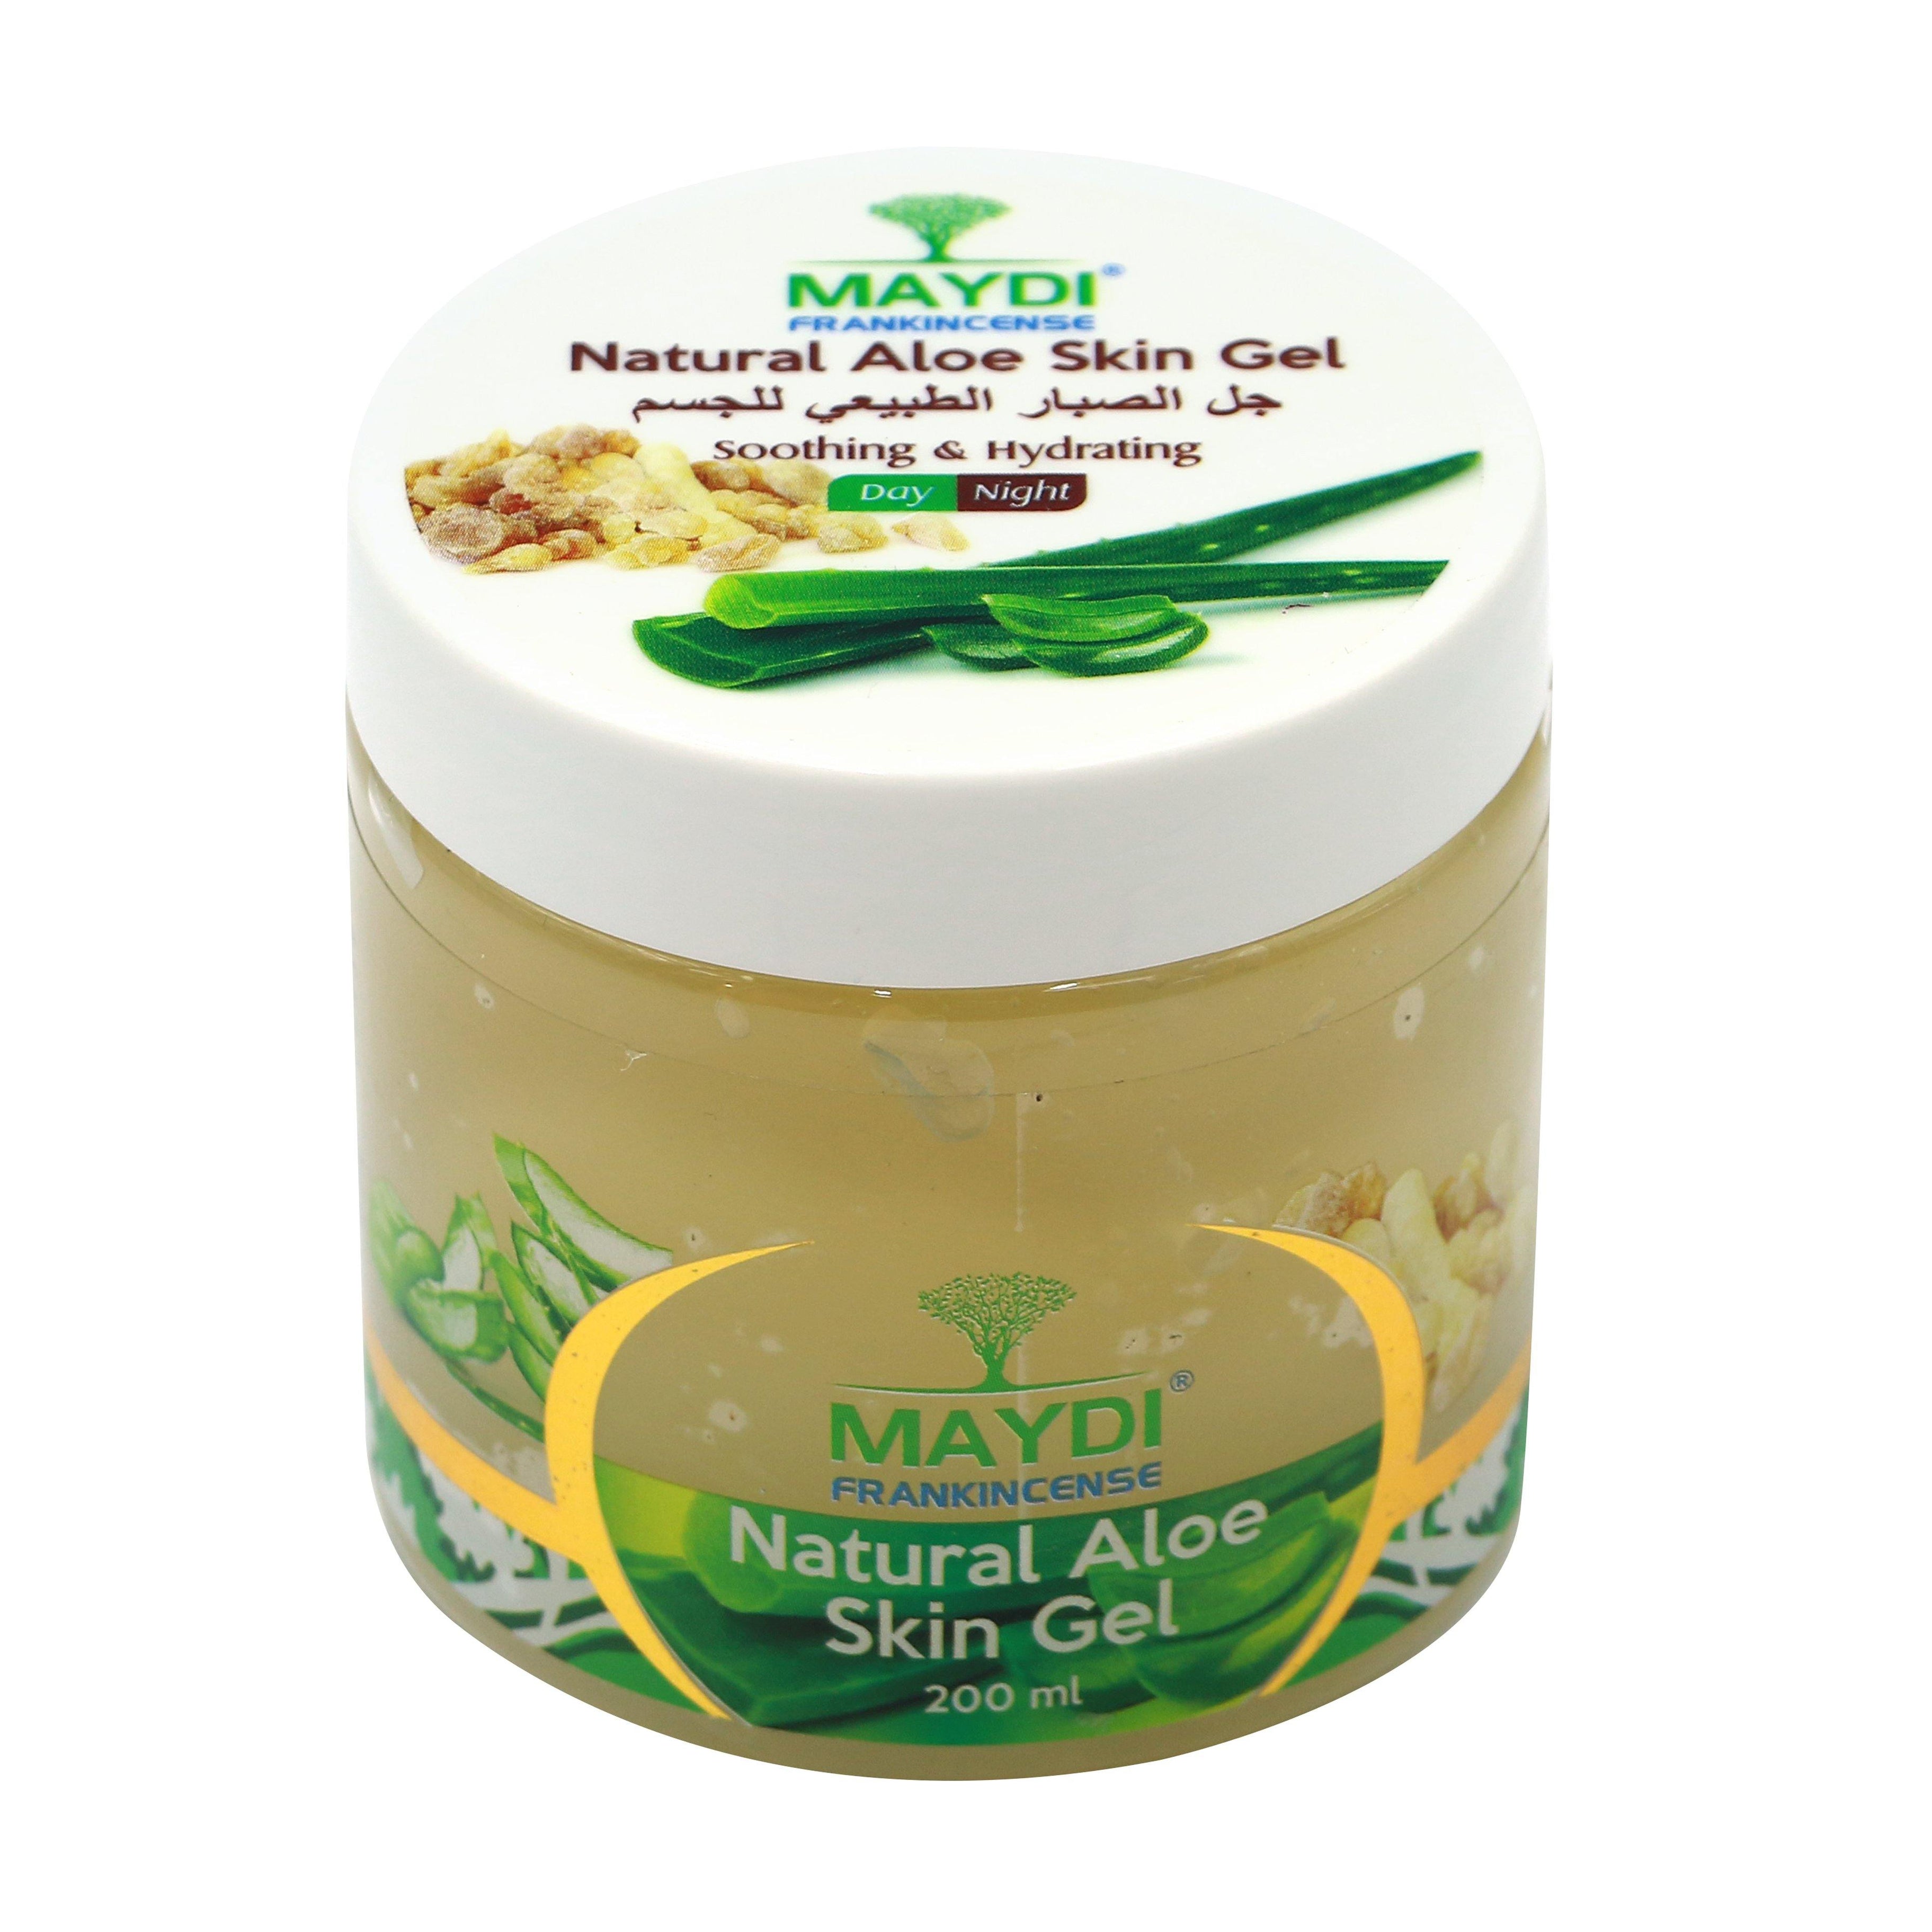 Maydi Frankincense Natural Aloe Vera Face & Skin Gel, 200ml - Med7 Online